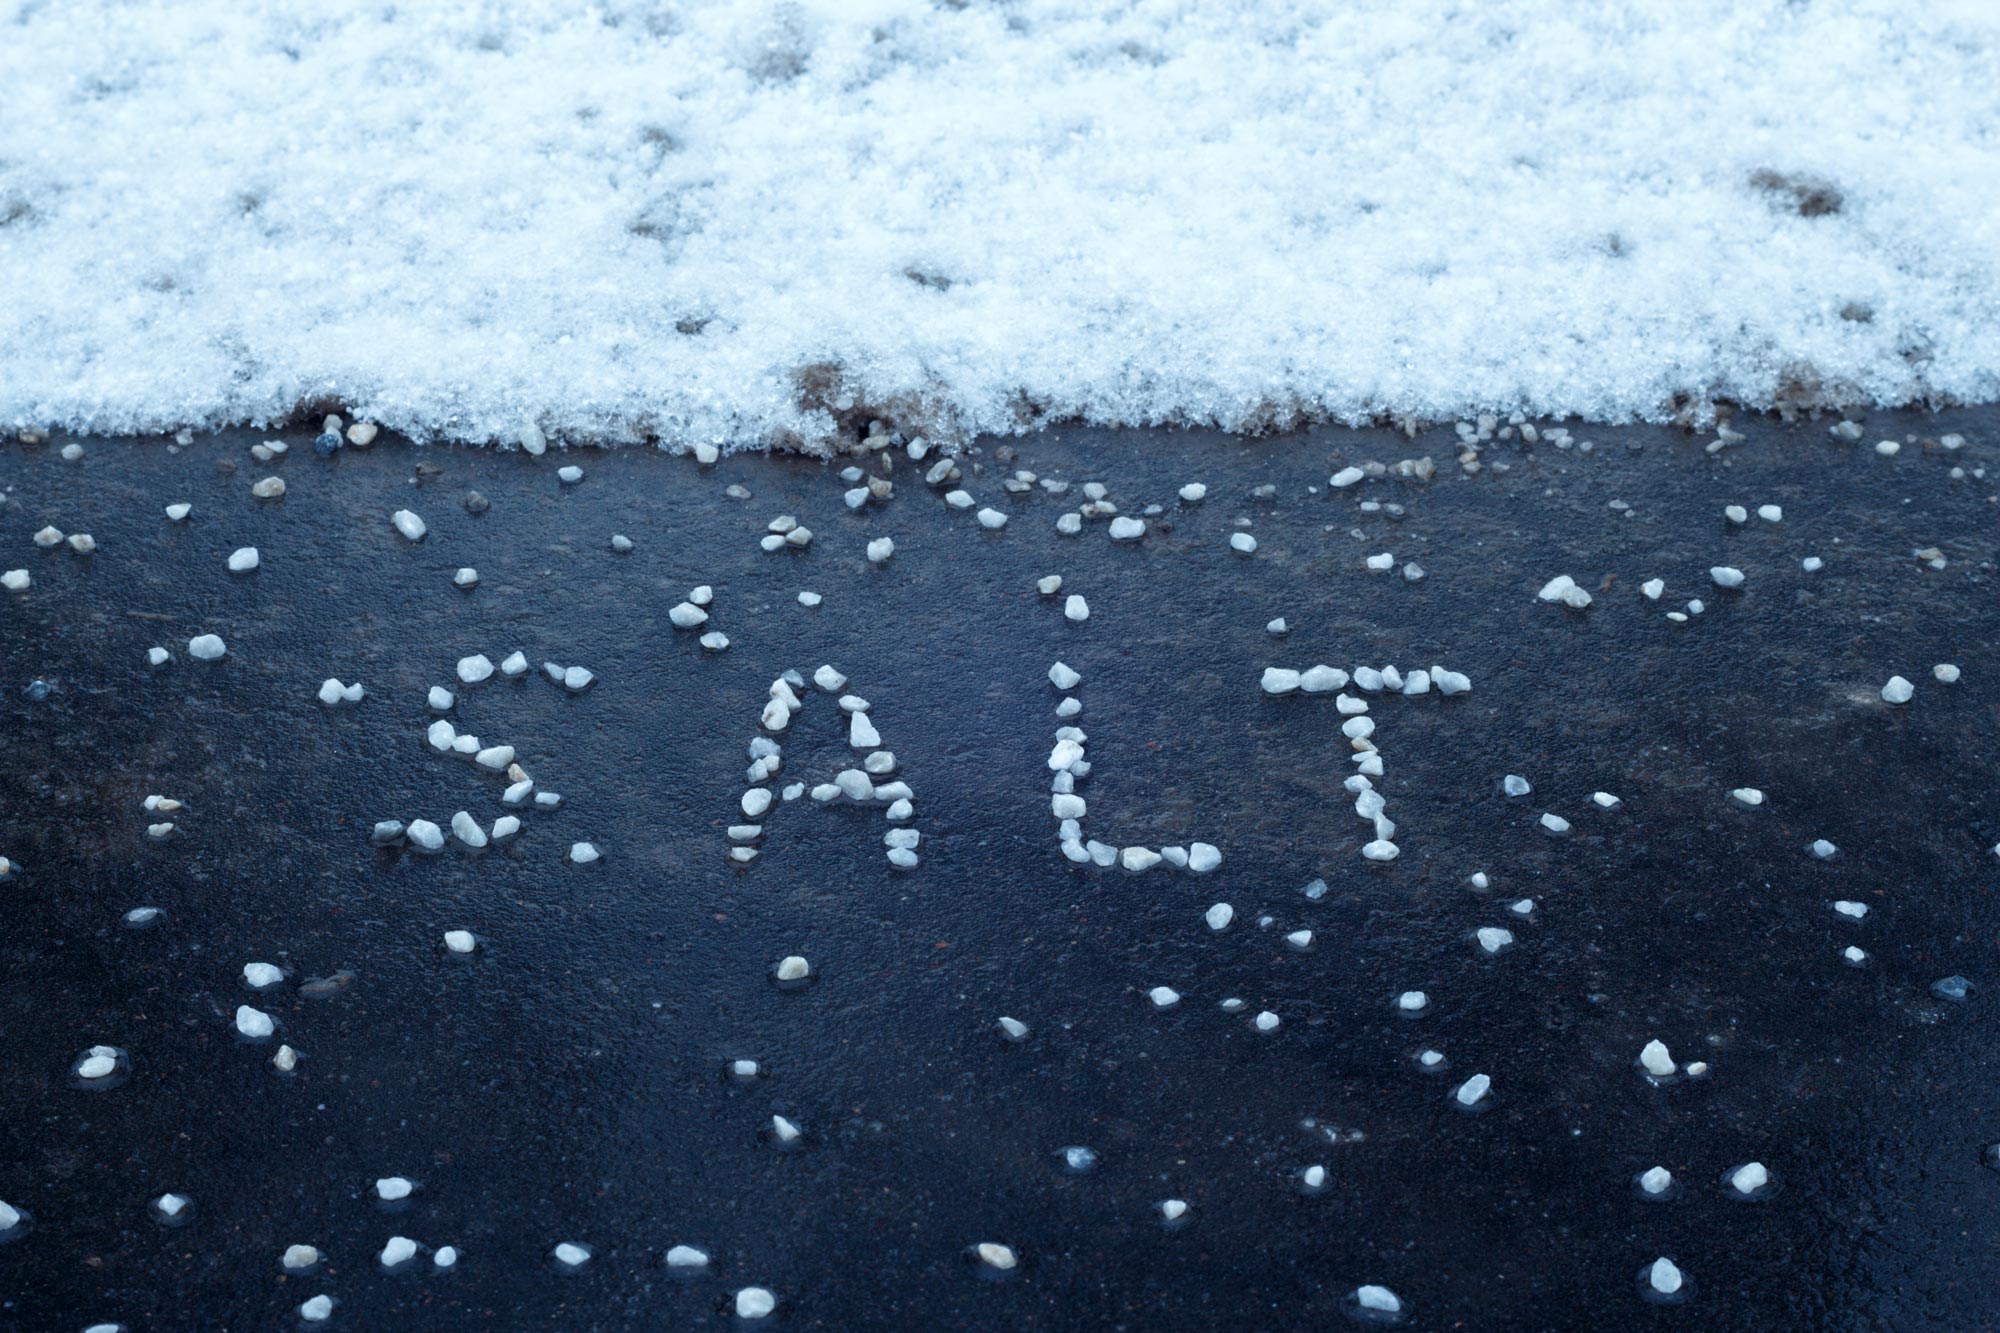 word salt spelled in salt on asphalt with snow